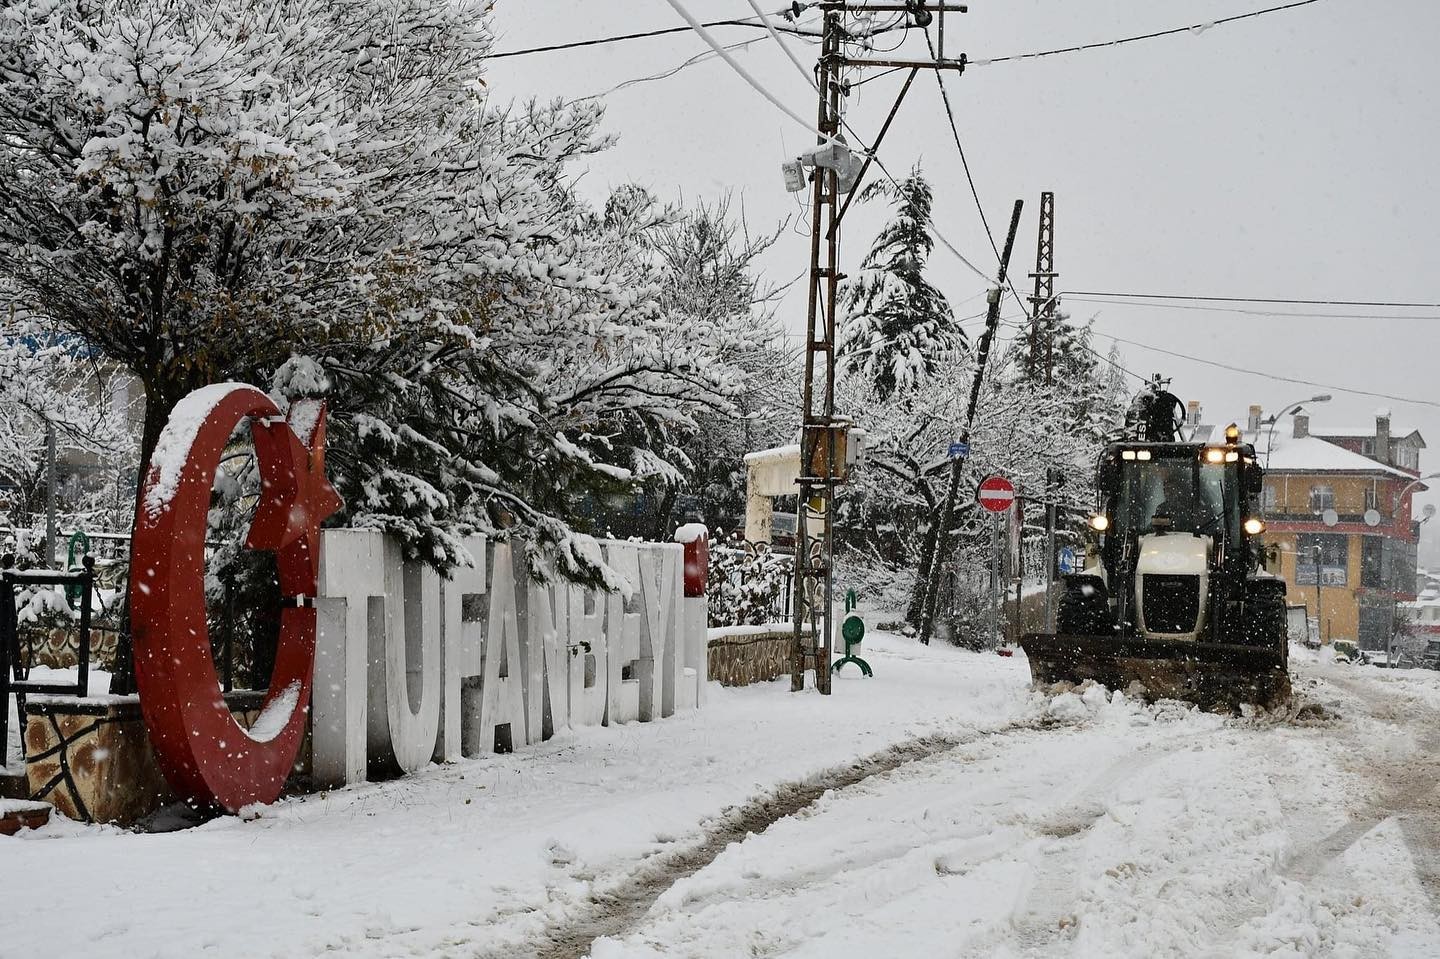 Tufanbeyli’de karla mücadele #adana